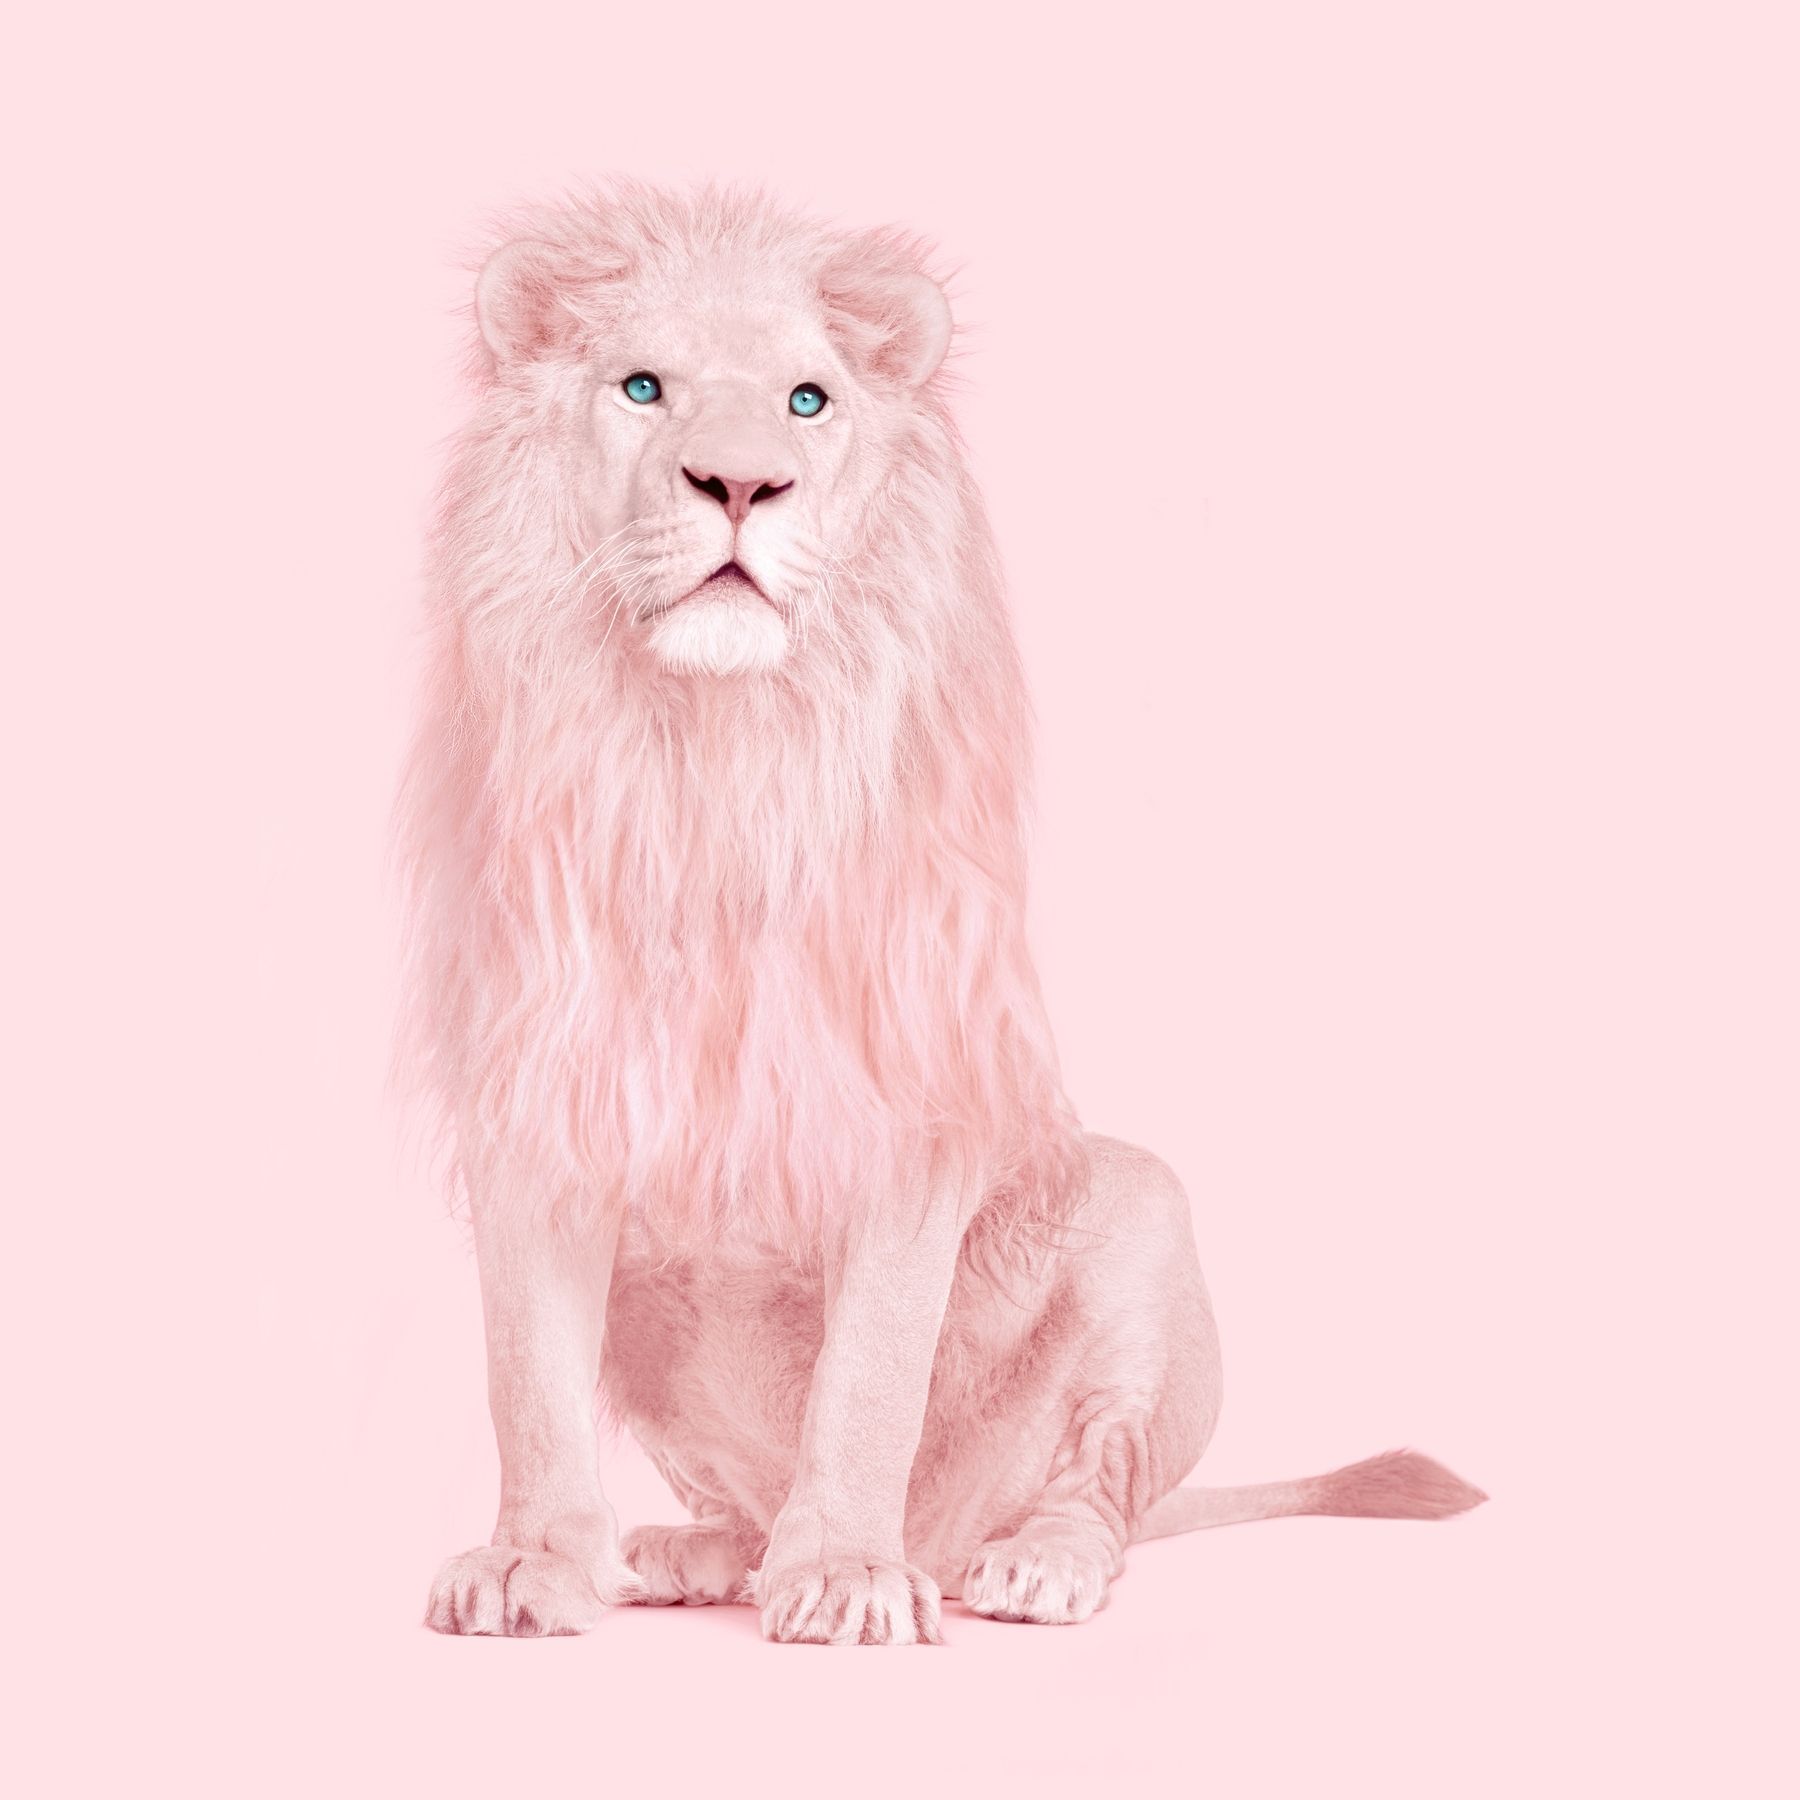 PINK LION Wallpaper. Lion poster, Albino lion, Pink animals